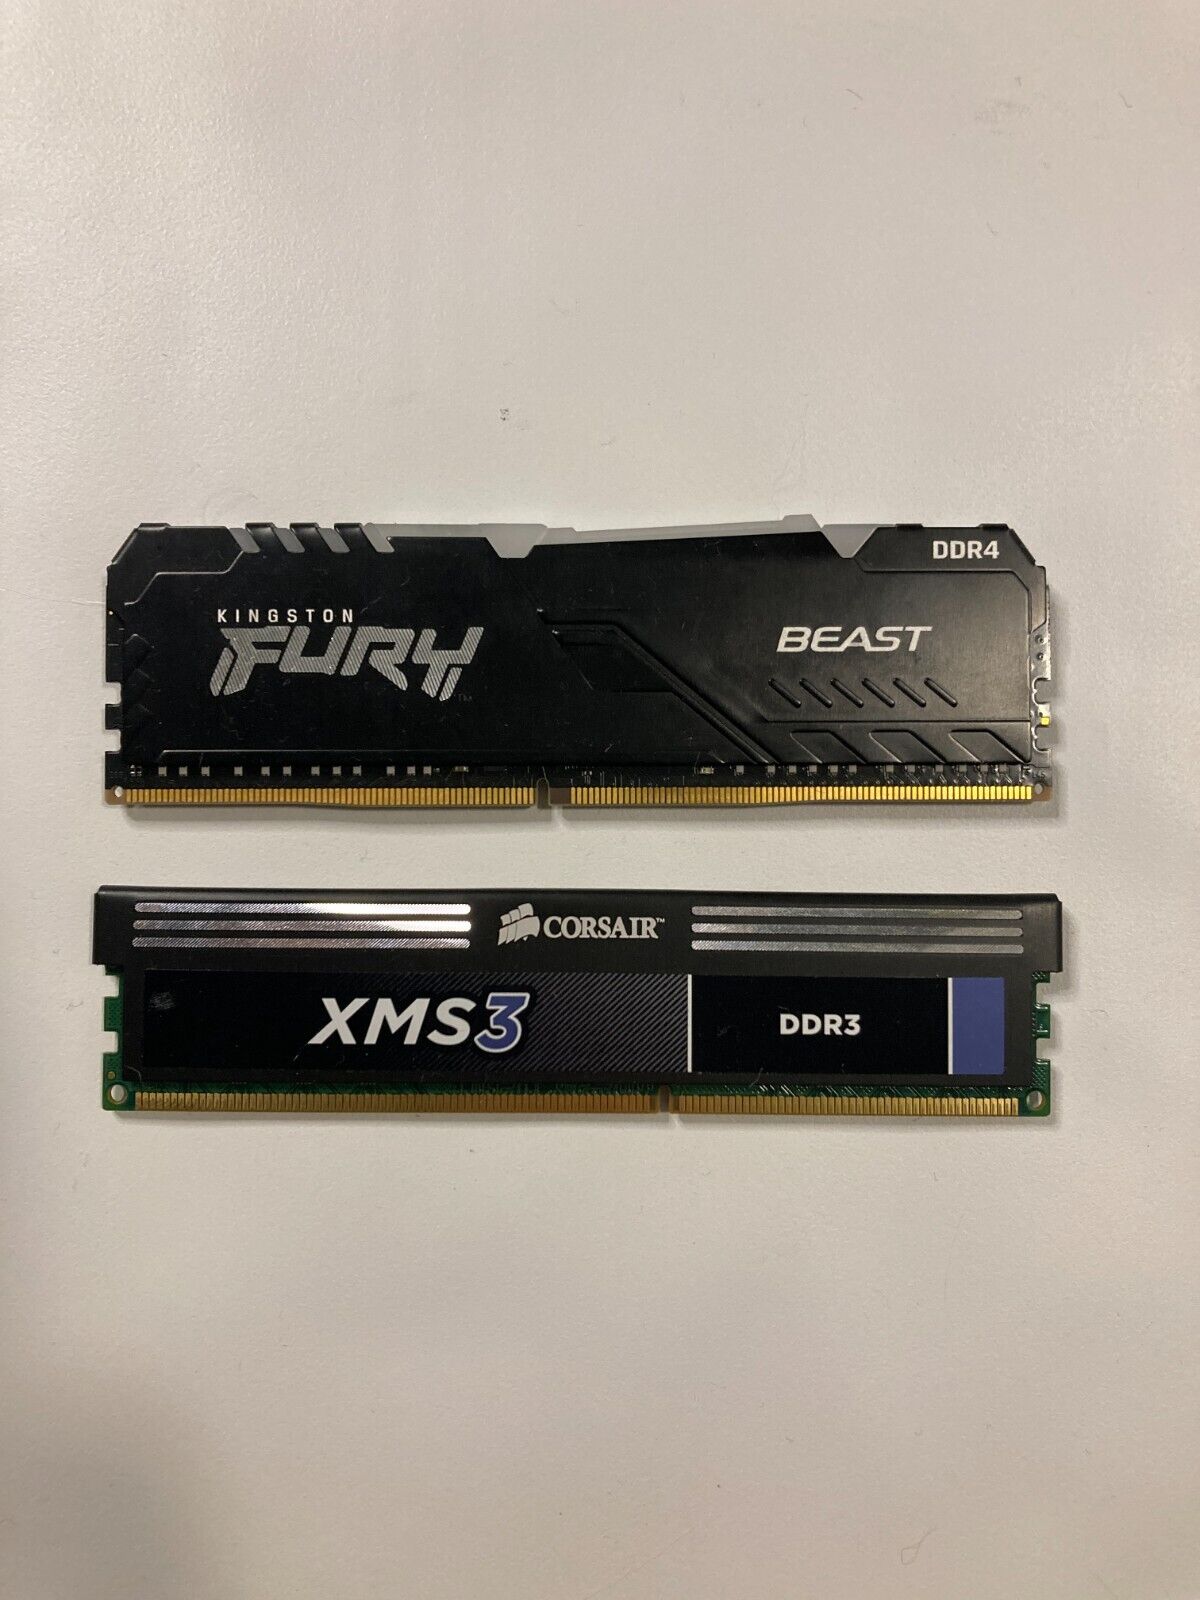 Two sticks of PC RAM Kingston Fury DDR4 8GB and Corsair XMS3 DDR3 2GB